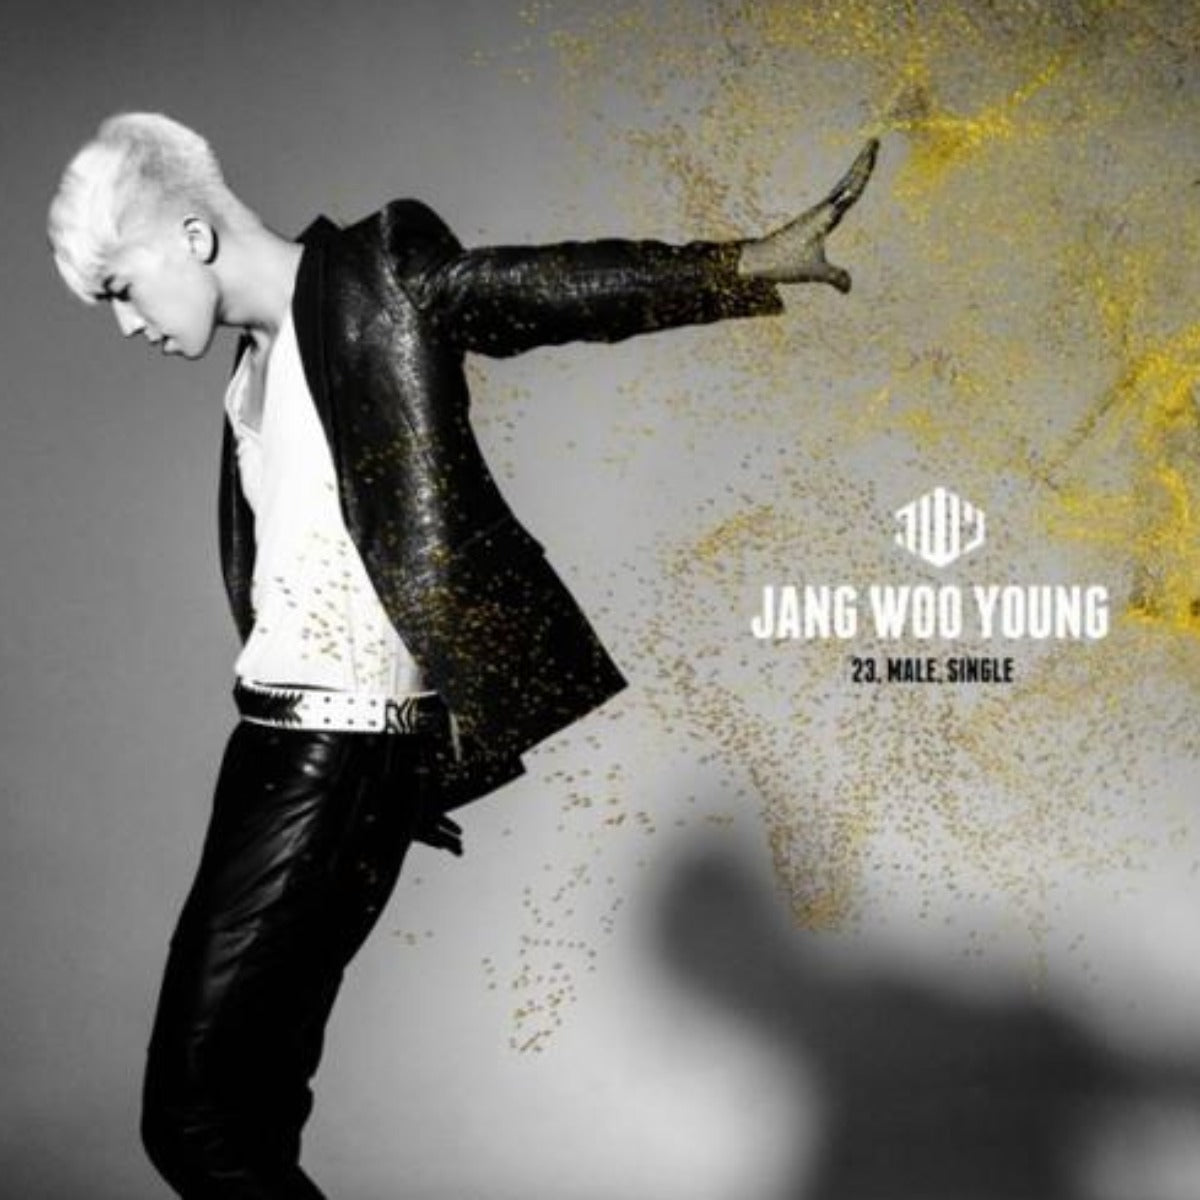 2PM : Jang Woo Young Mini Album Vol. 1 - 23, Male, Single (Gold Edition)